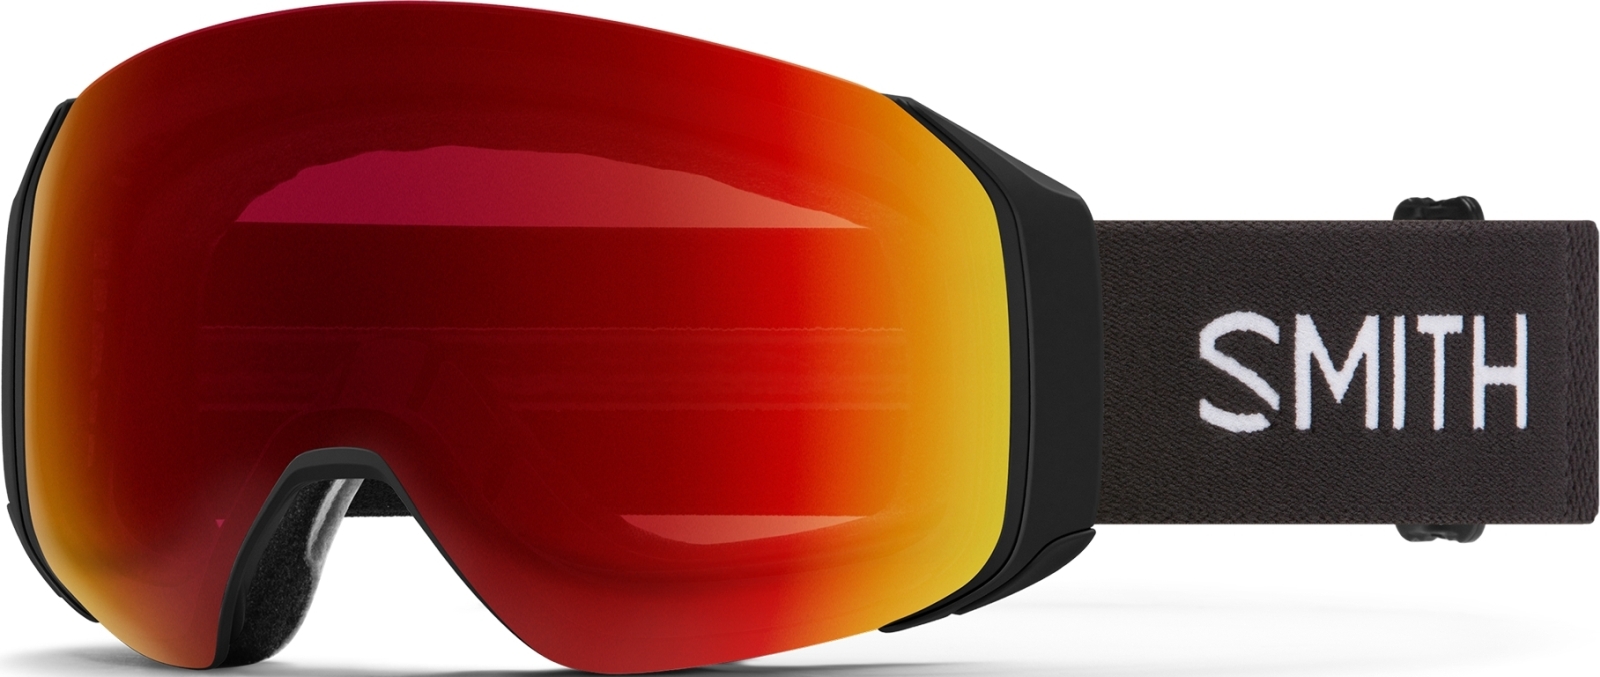 E-shop Smith 4D MAG S - Black/Chromapop Sun Red Mirror + ChromaPop Storm Yellow Flash uni